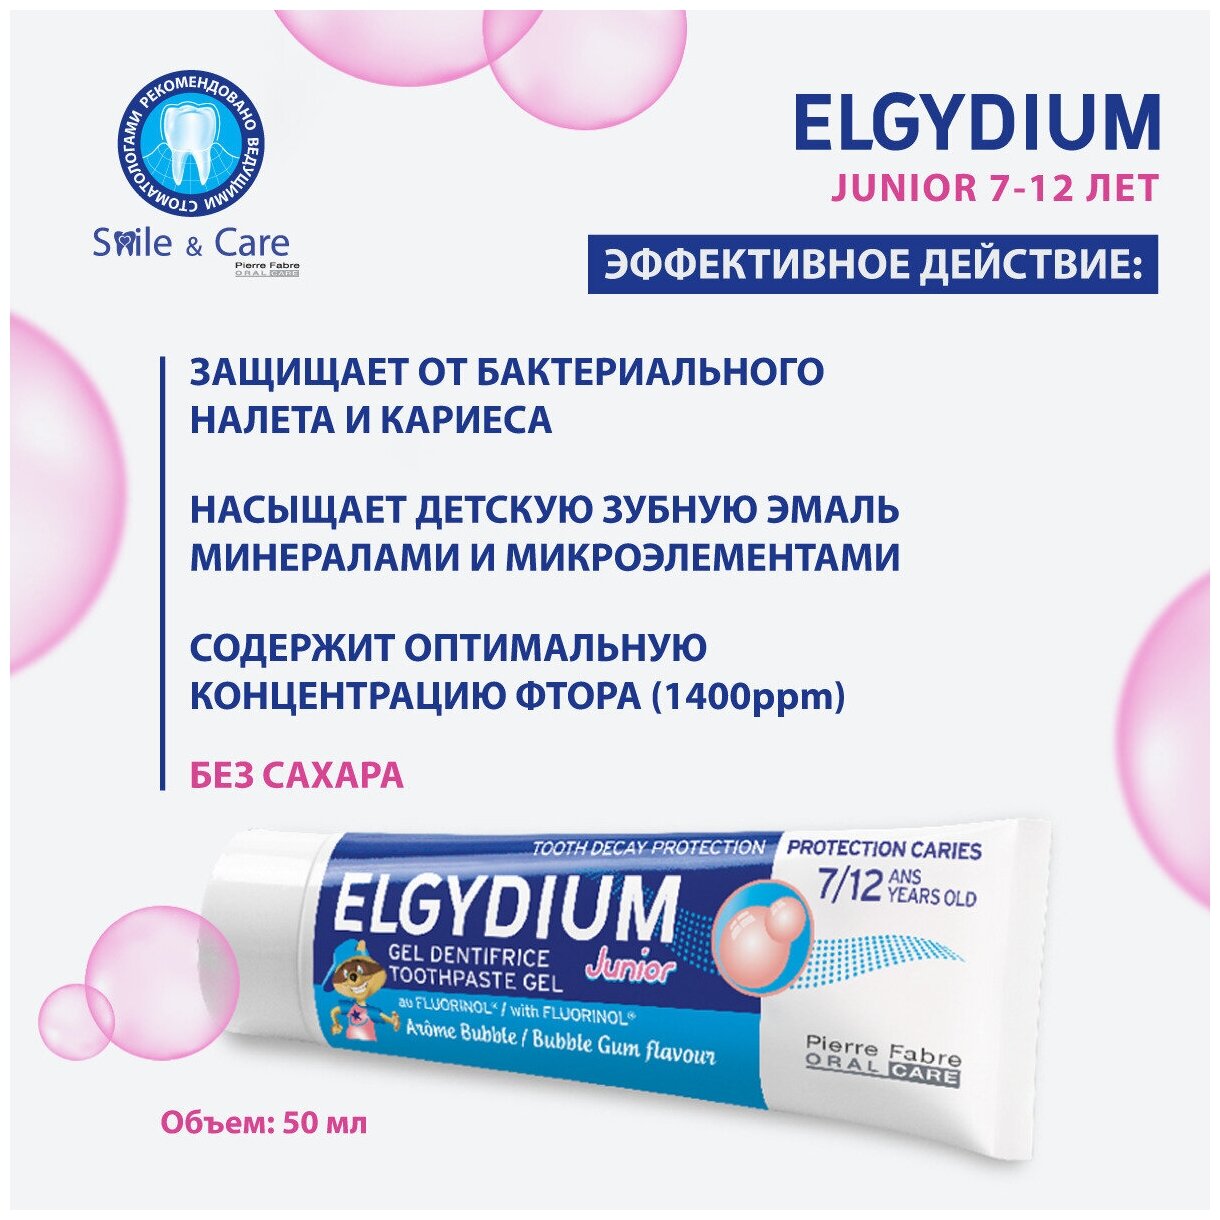 Pierre Fabre Elgydium Junior Protection Aroma Bubble / Зубная паста 7-12 лет , 50 мл.